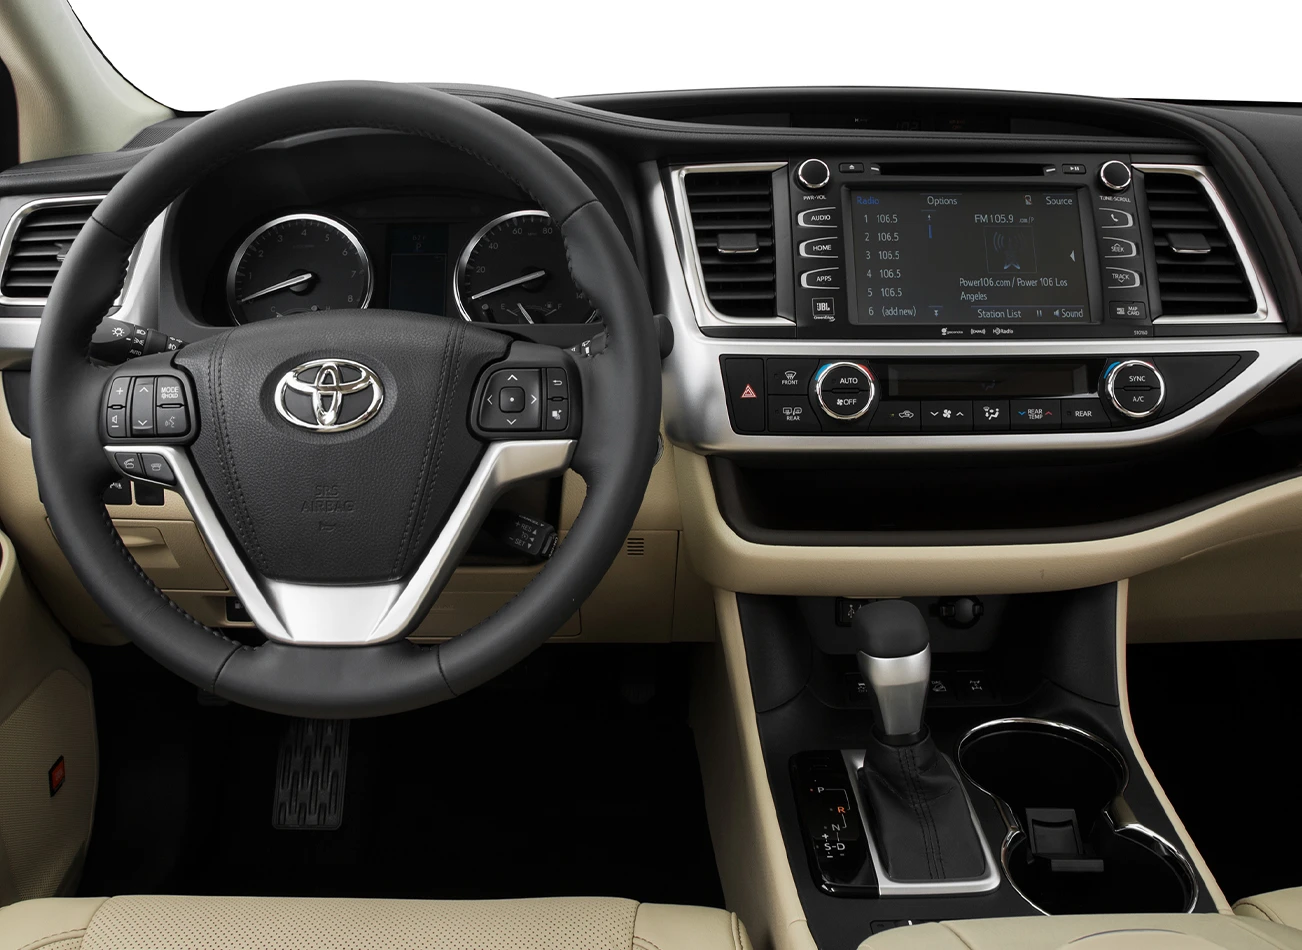 2016 Toyota Highlander: Reviews, Photos, and More: Reasons to Buy #5 | CarMax